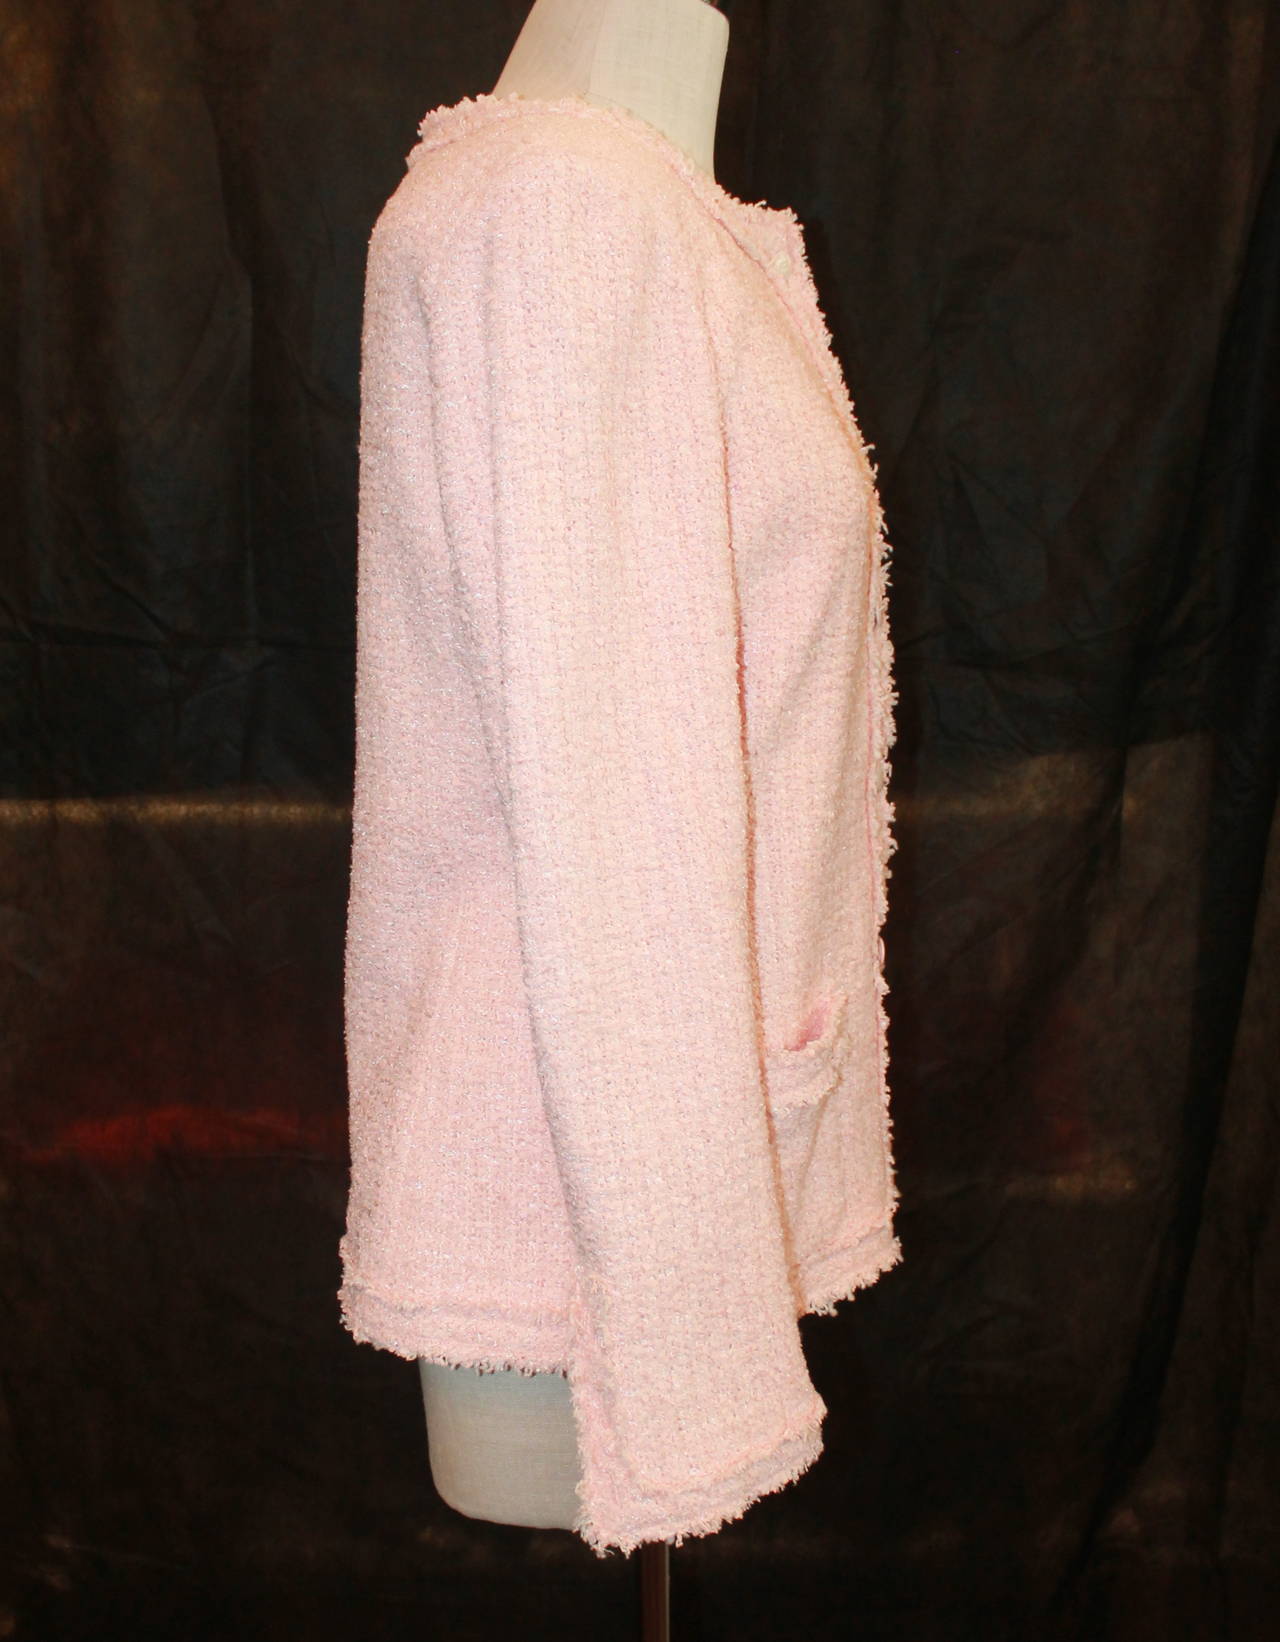 Beige Chanel 2004 Pink Tweed & Textured Trim Jacket - 40 - 2004